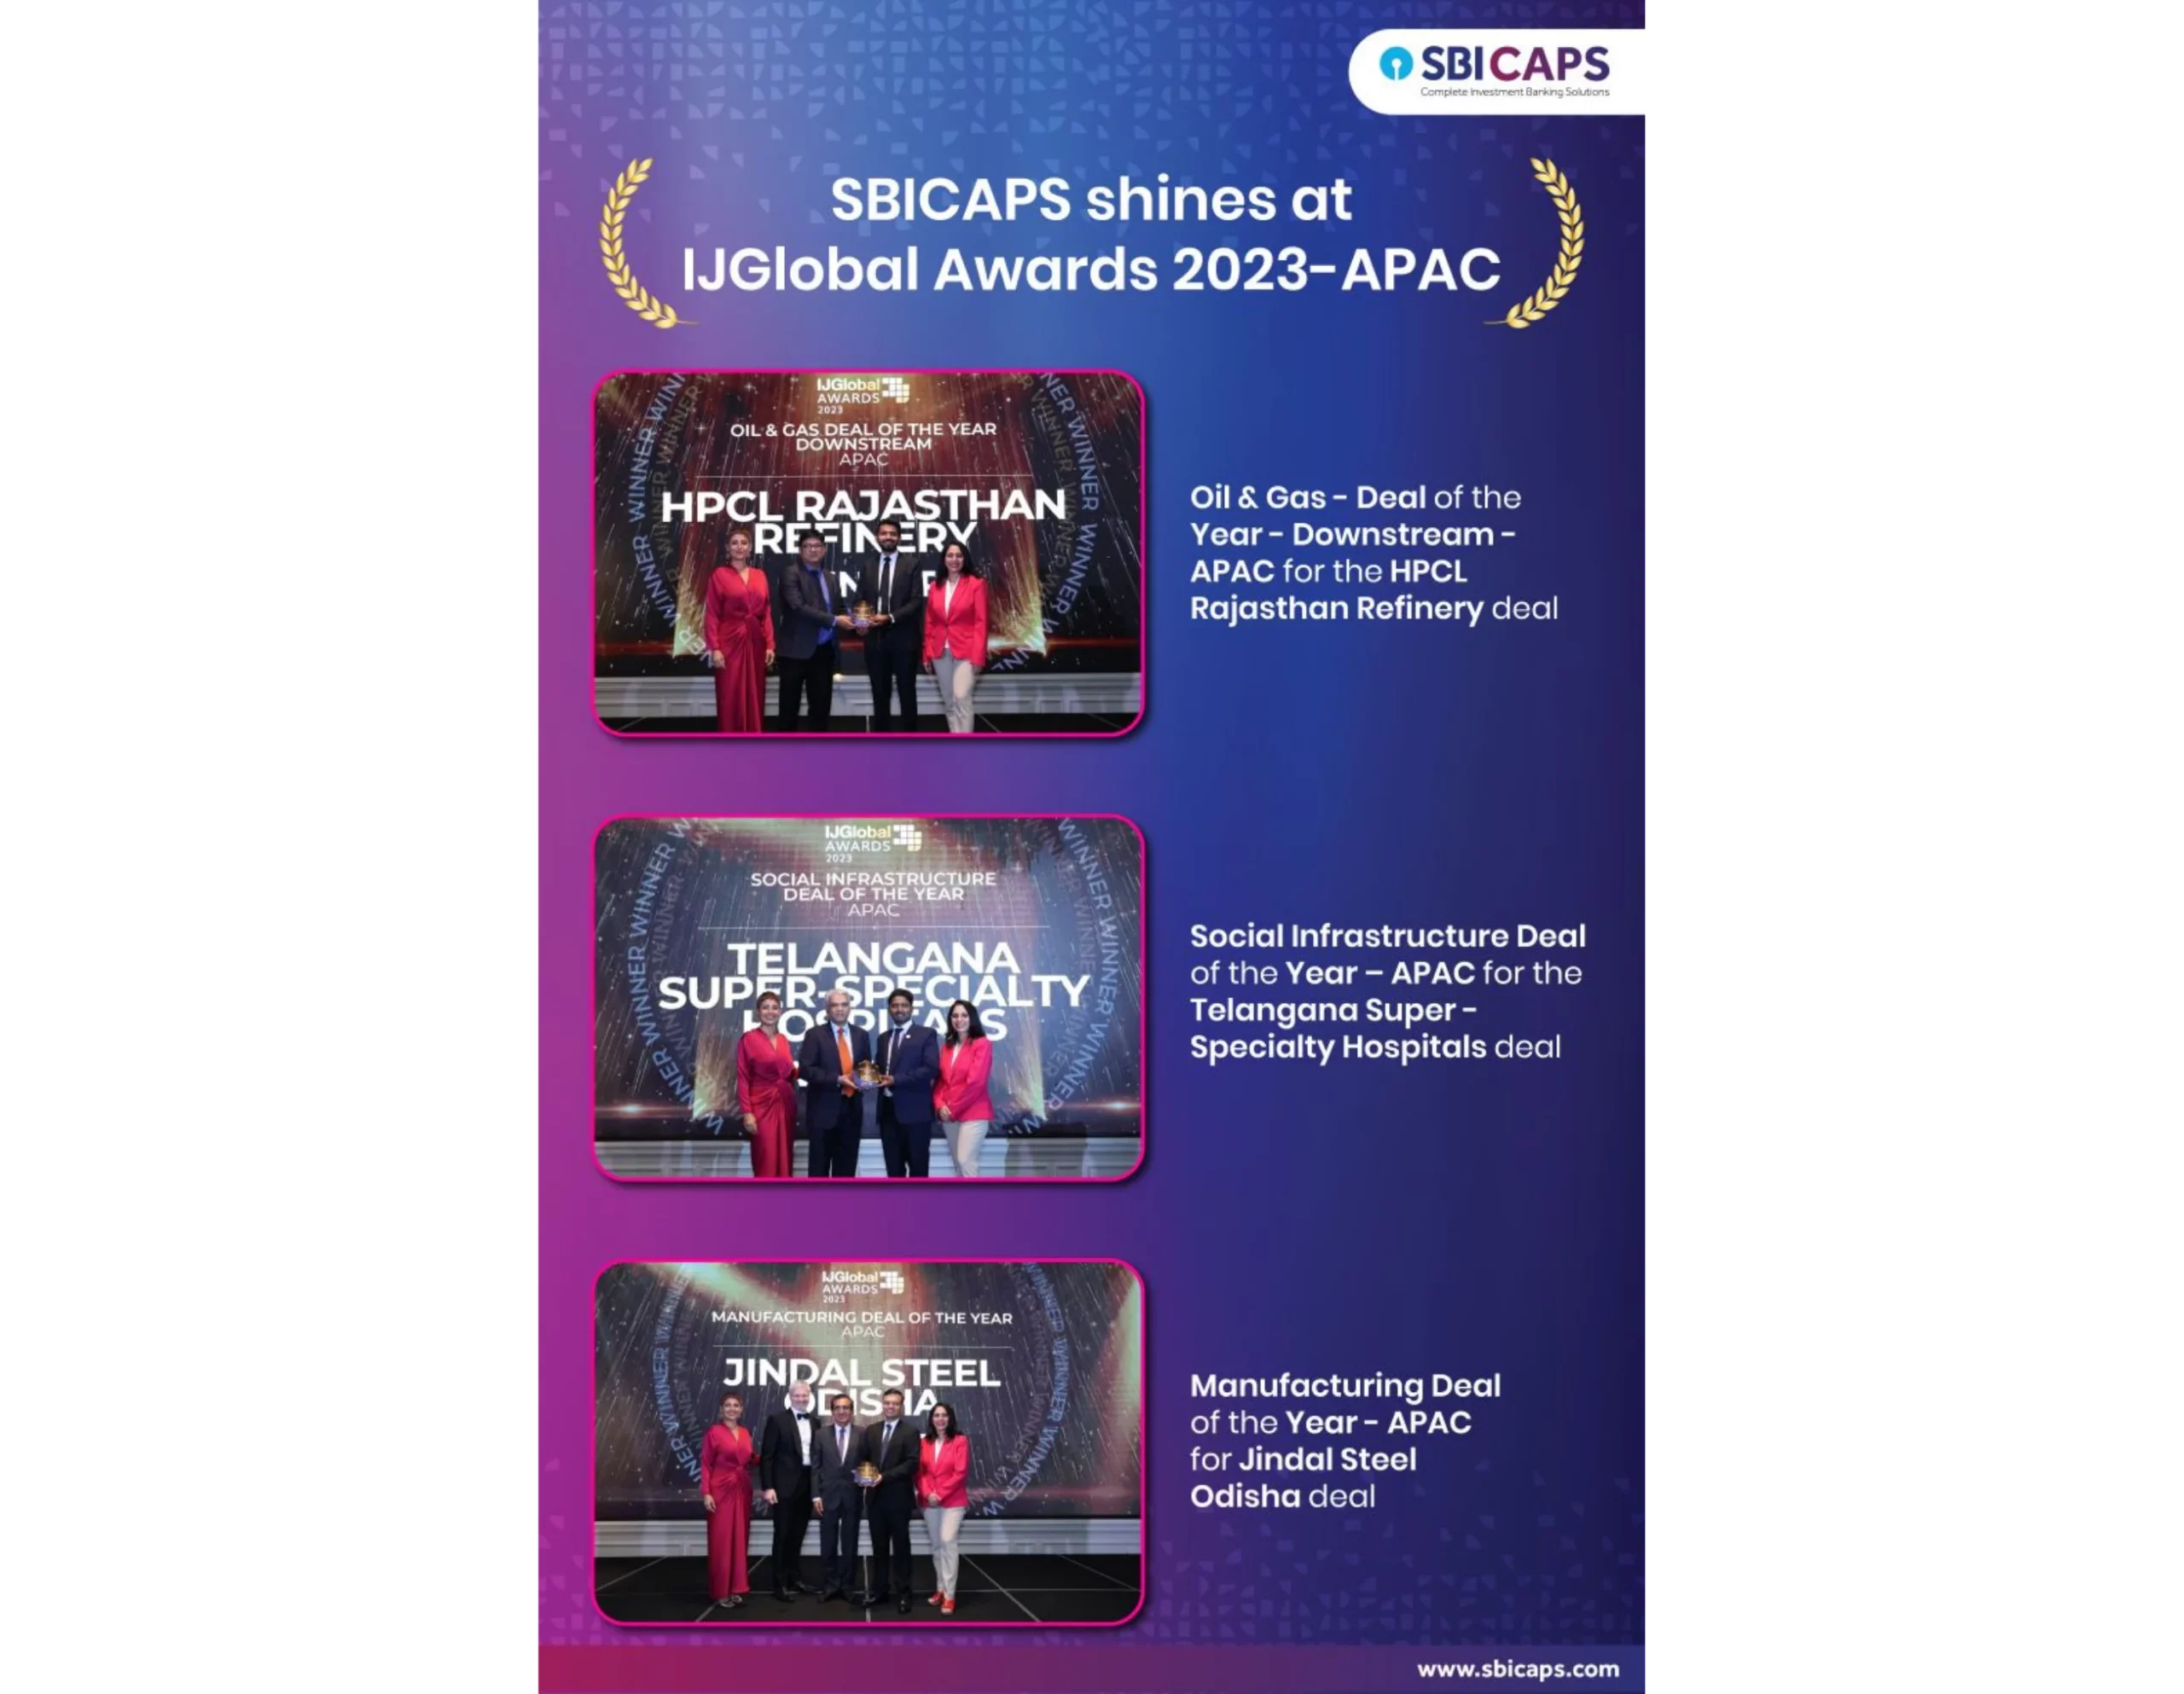 SBICAPS shines at IJ Global Awards 2023- APAC